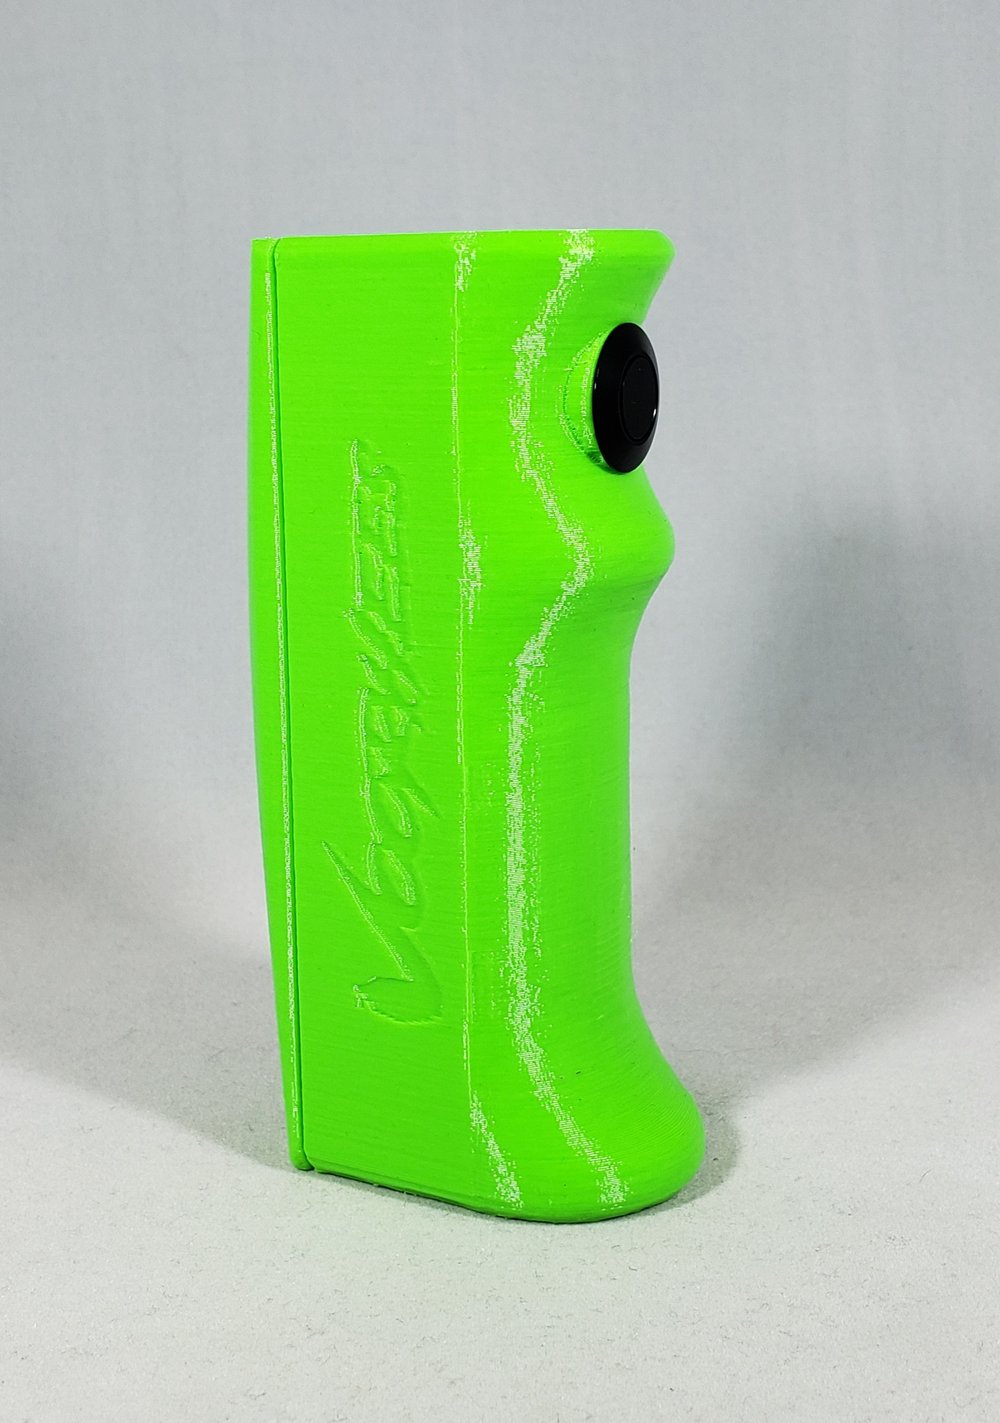 3D Printed Grip Single 21700 Mod